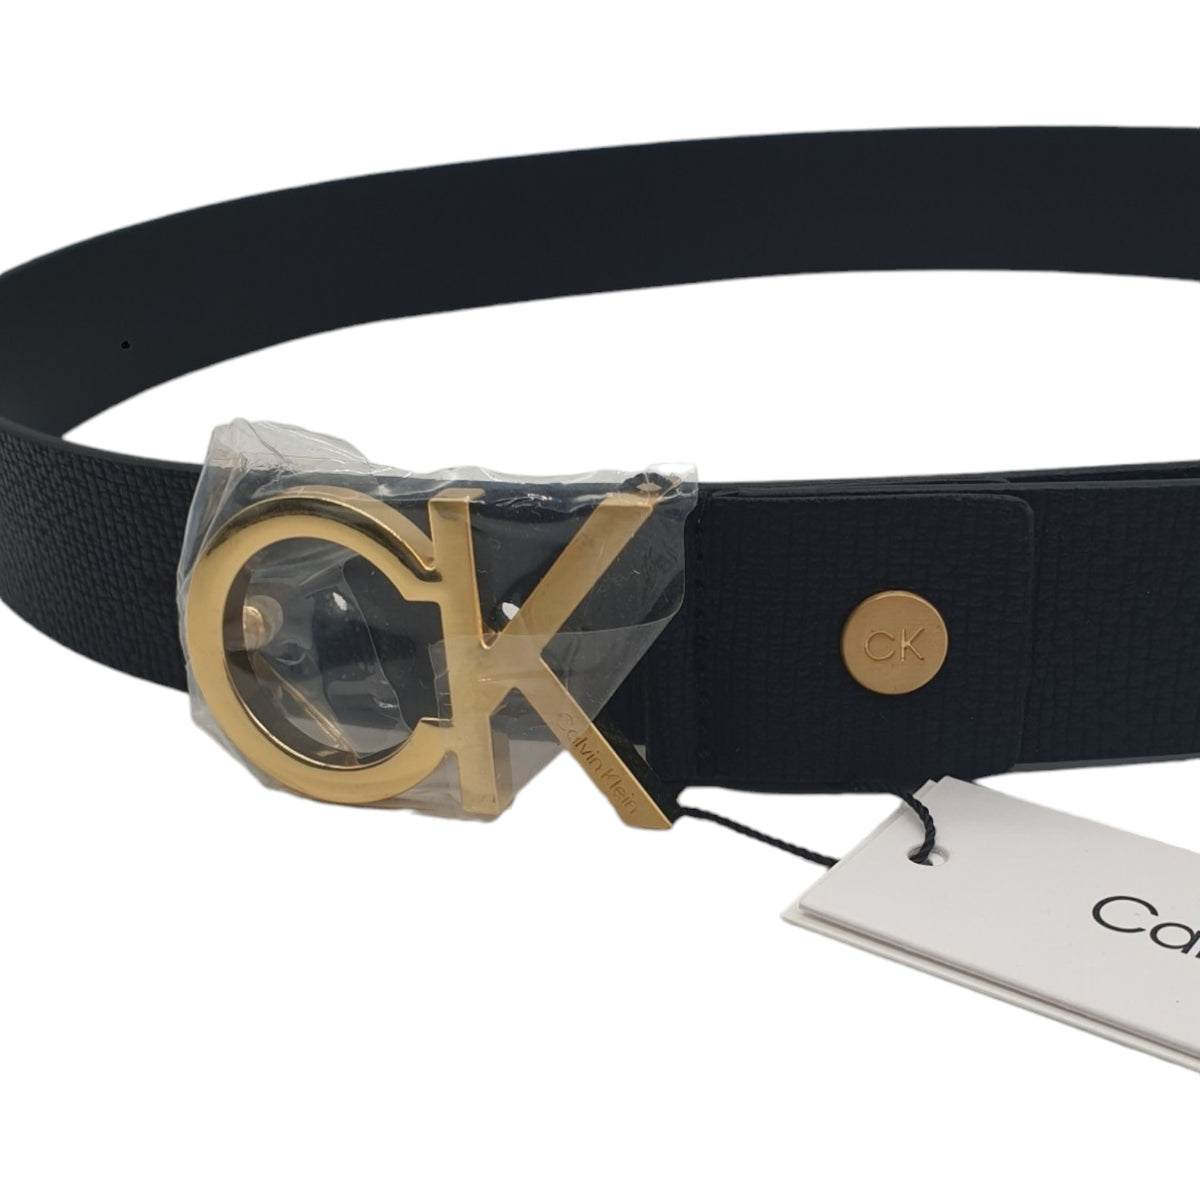 Calvin Klein Black/Gold Metal Buckle Belt